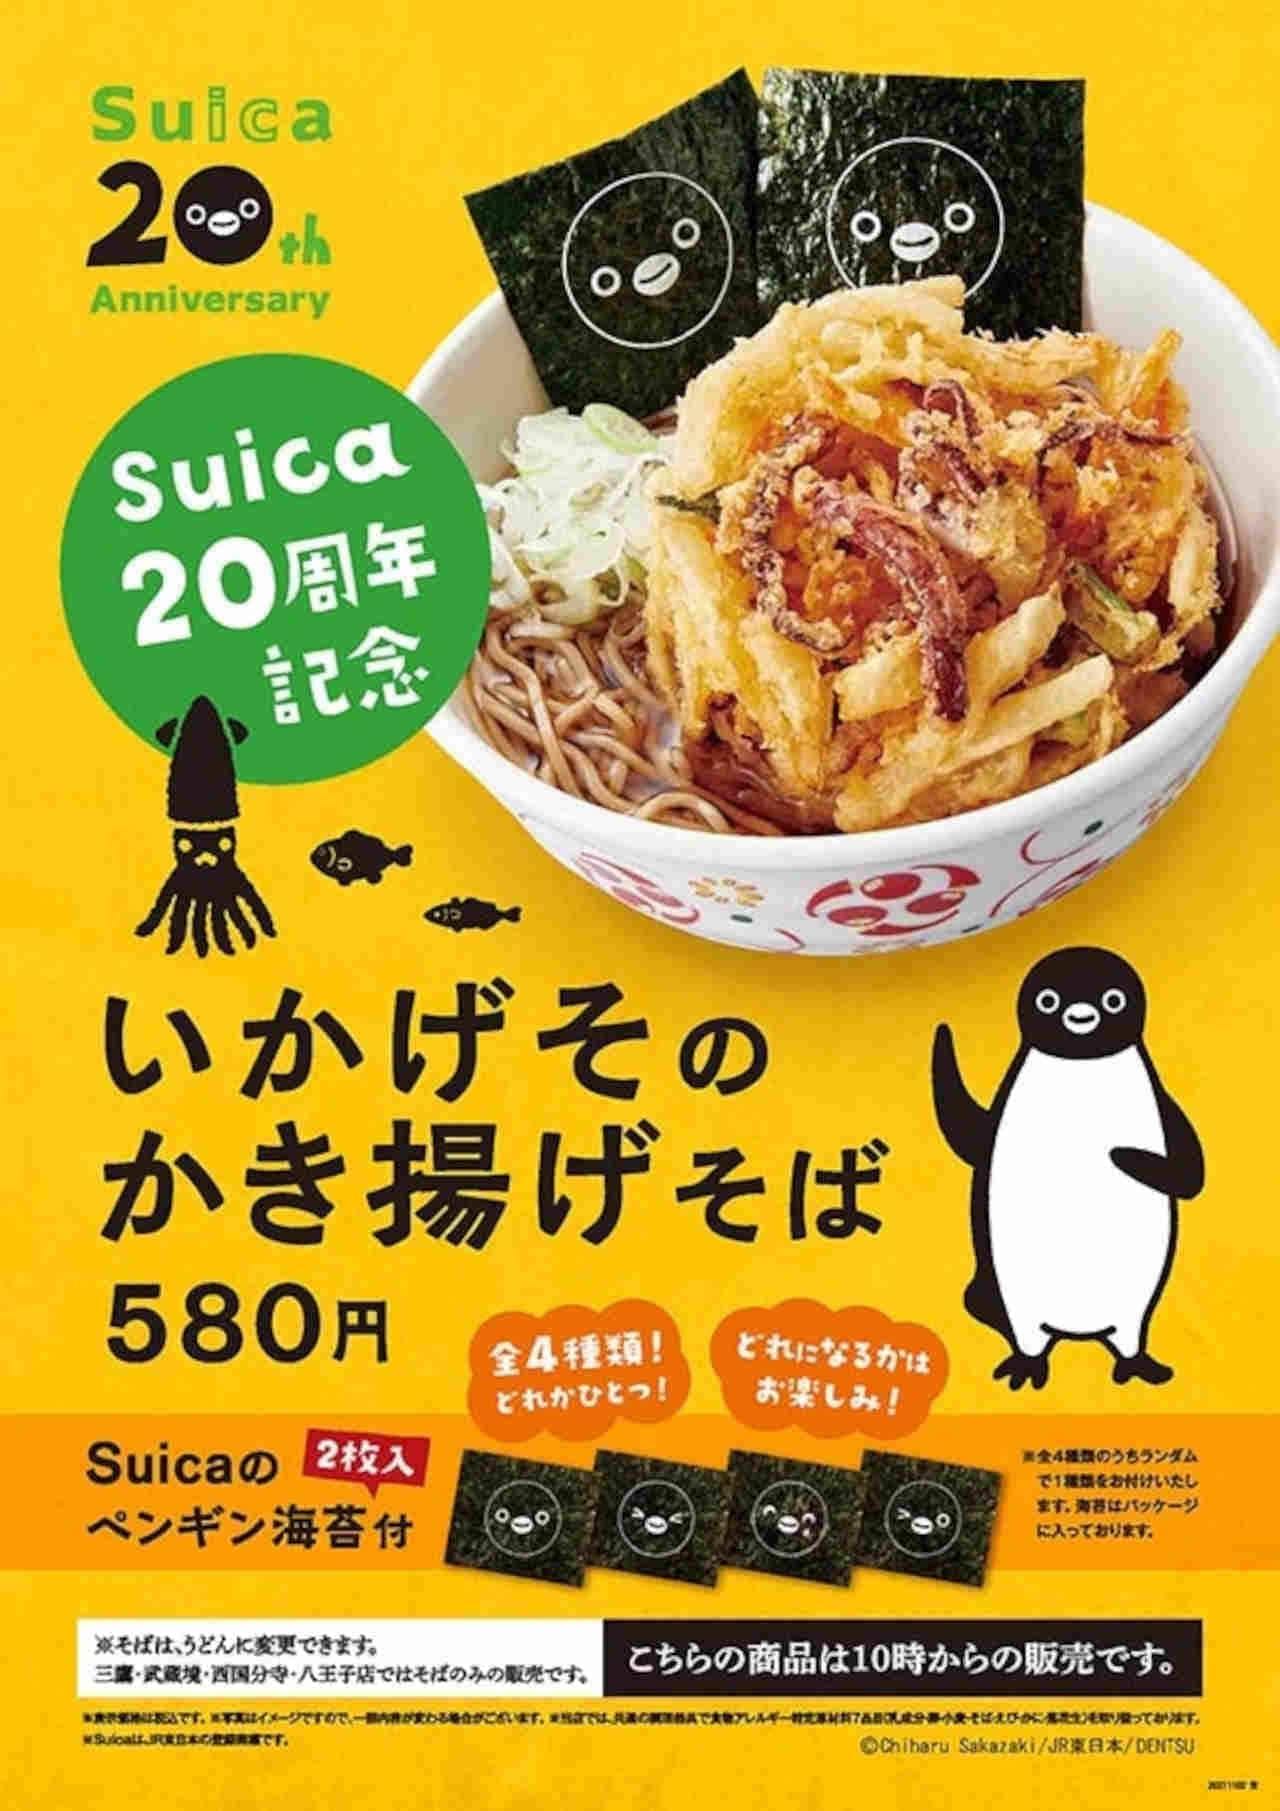 Irorian Kiraku "Suica's Penguin Squid Kakiage Soba"